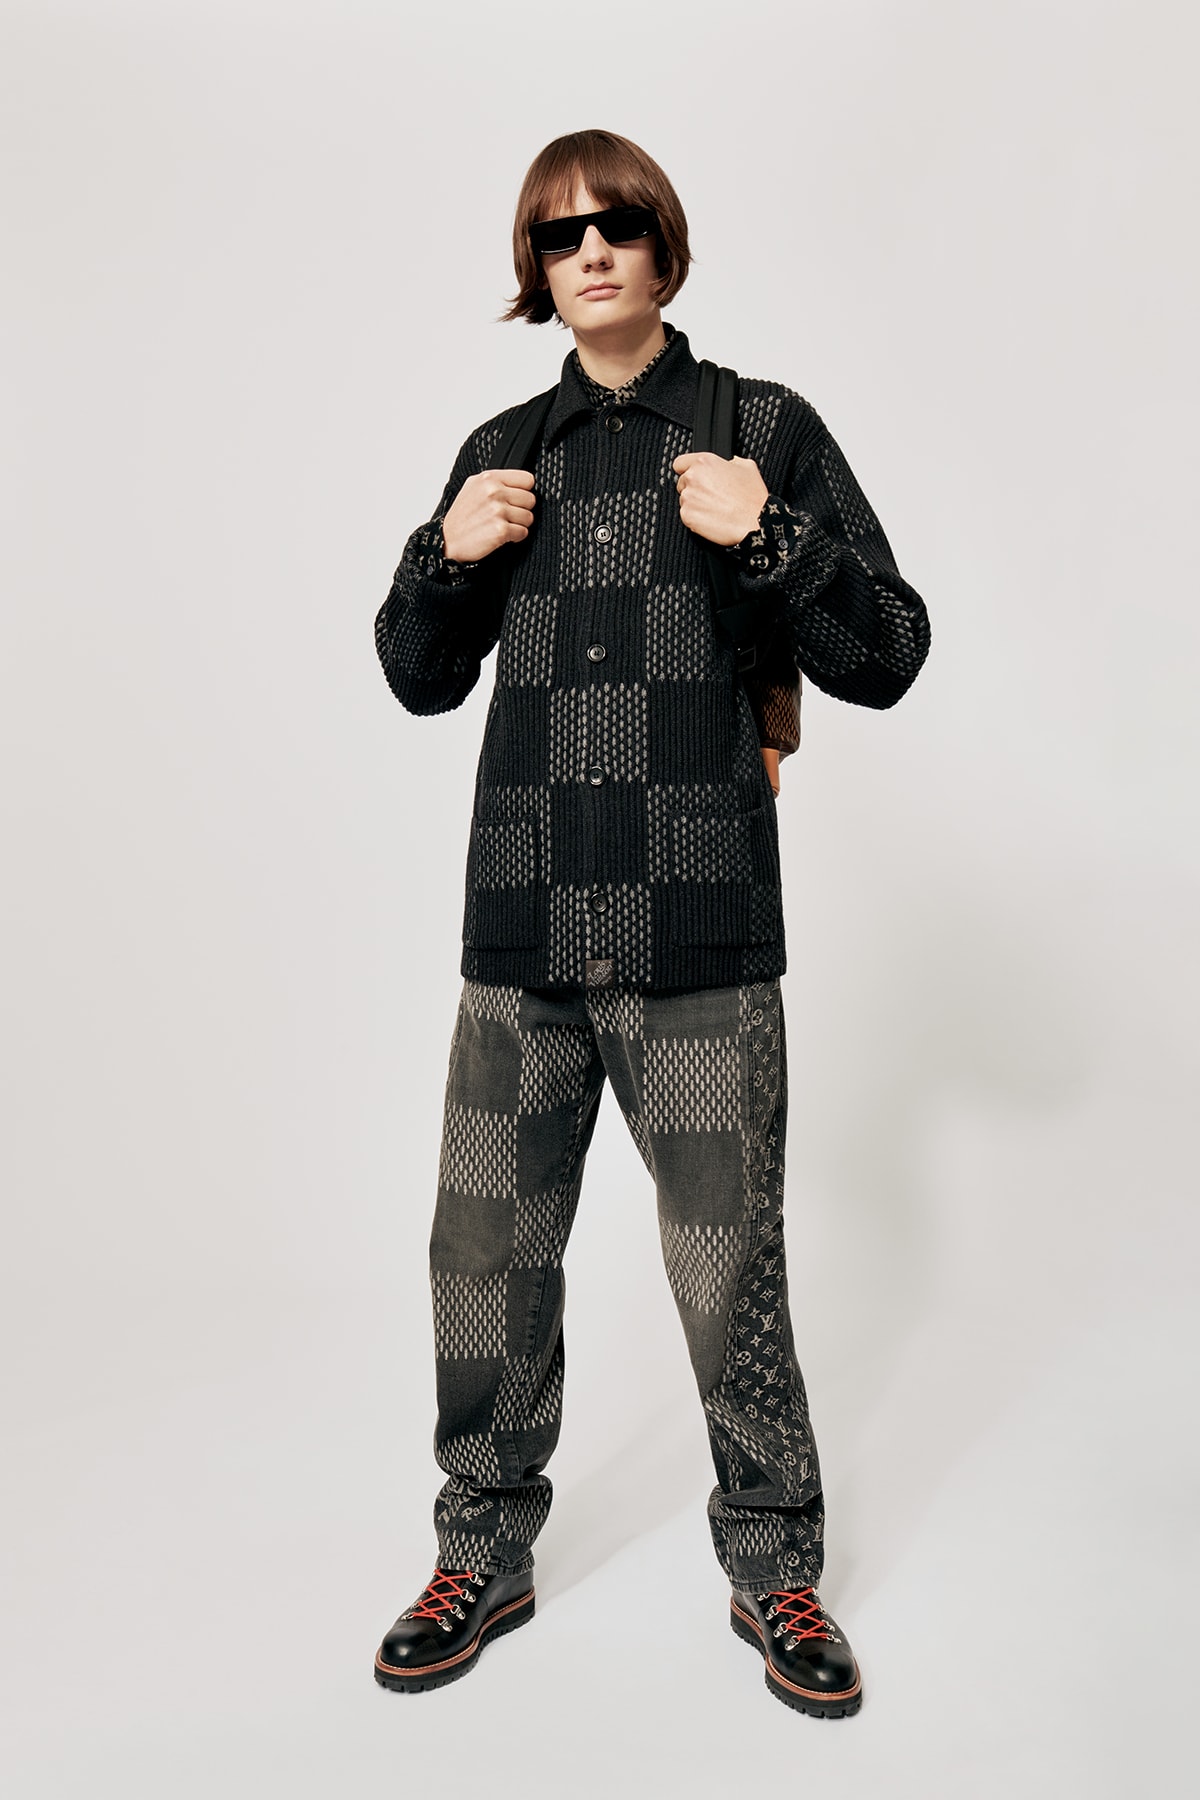 Louis Vuitton NIGO x Virgil Alboh LV2 Collection Lookbook Shirt Jeans Damier Check Grey Black